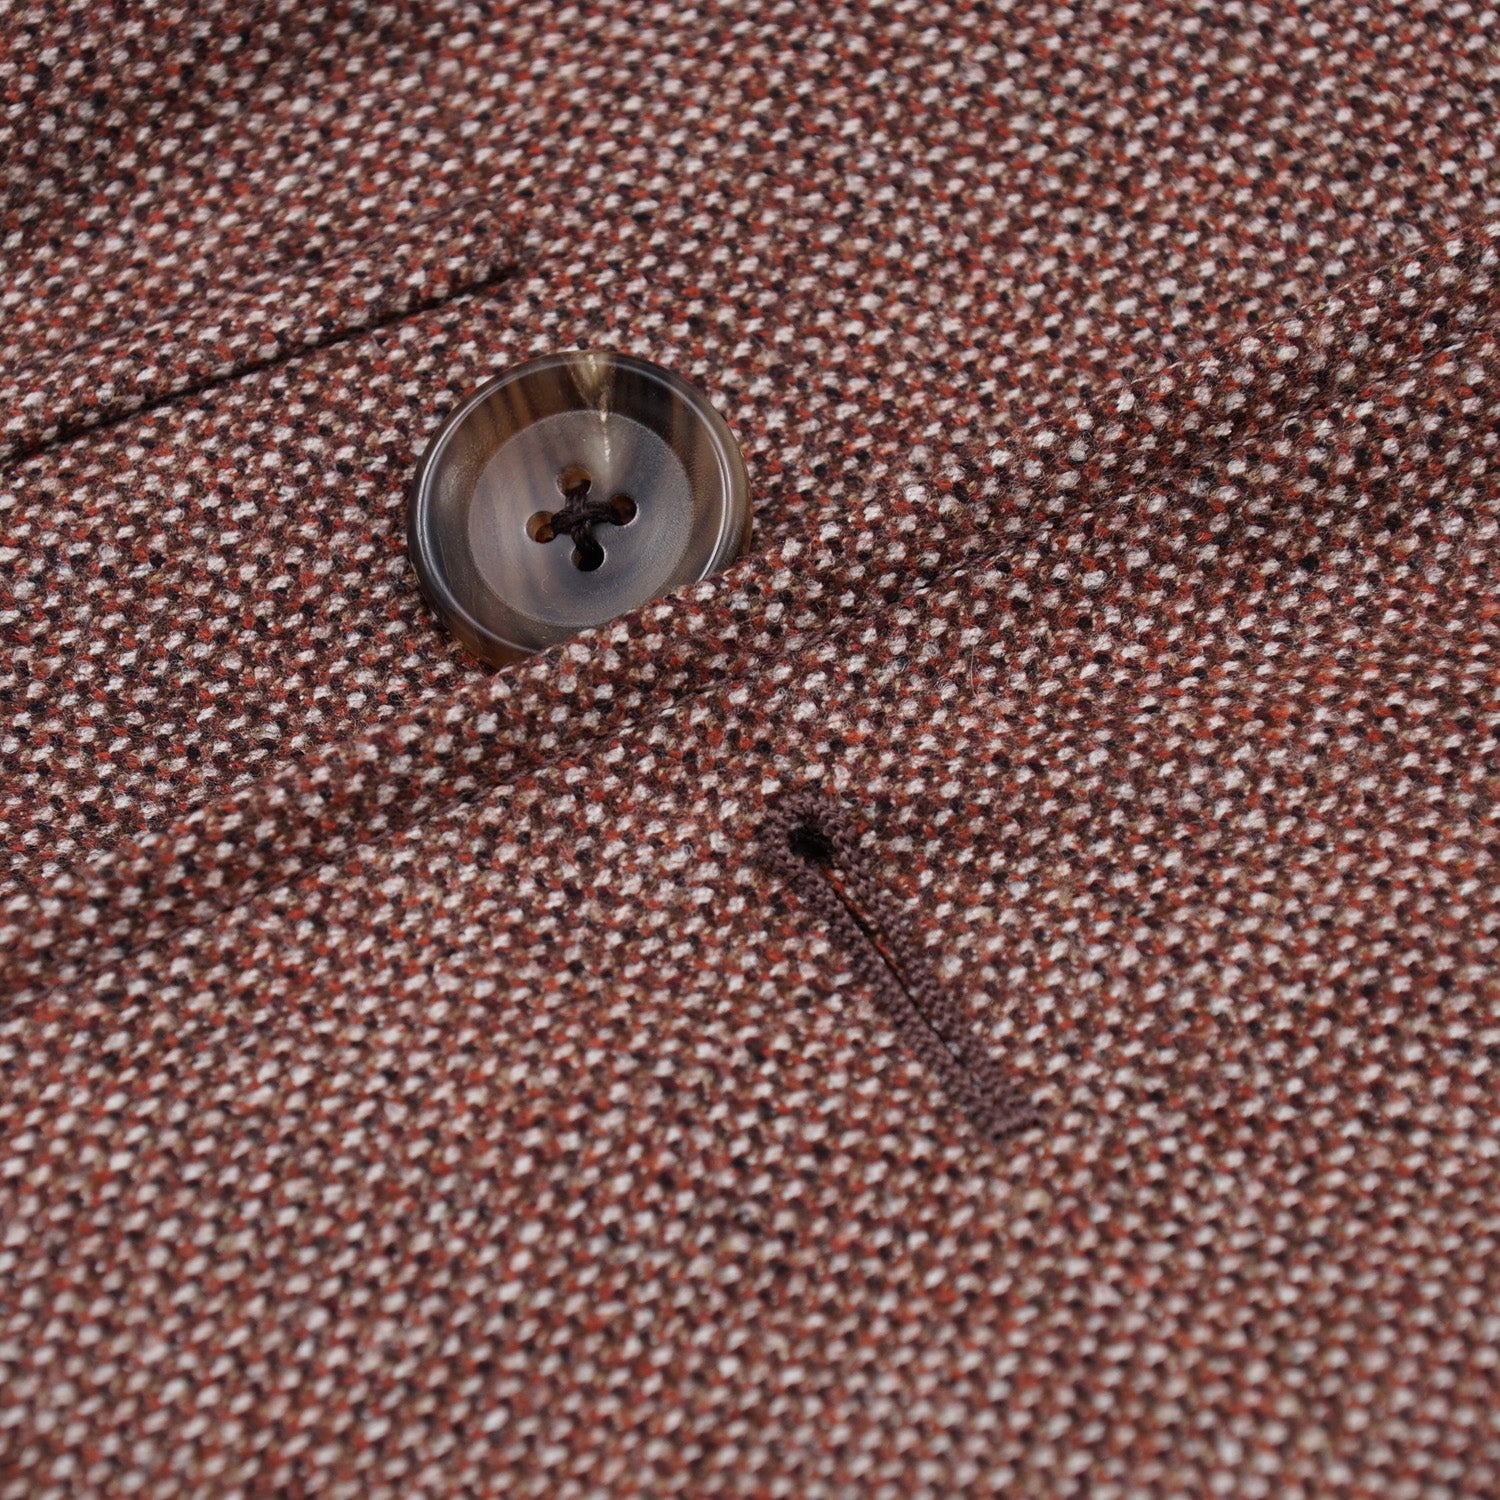 Belvest Donegal Tweed Wool Pea Coat - Top Shelf Apparel